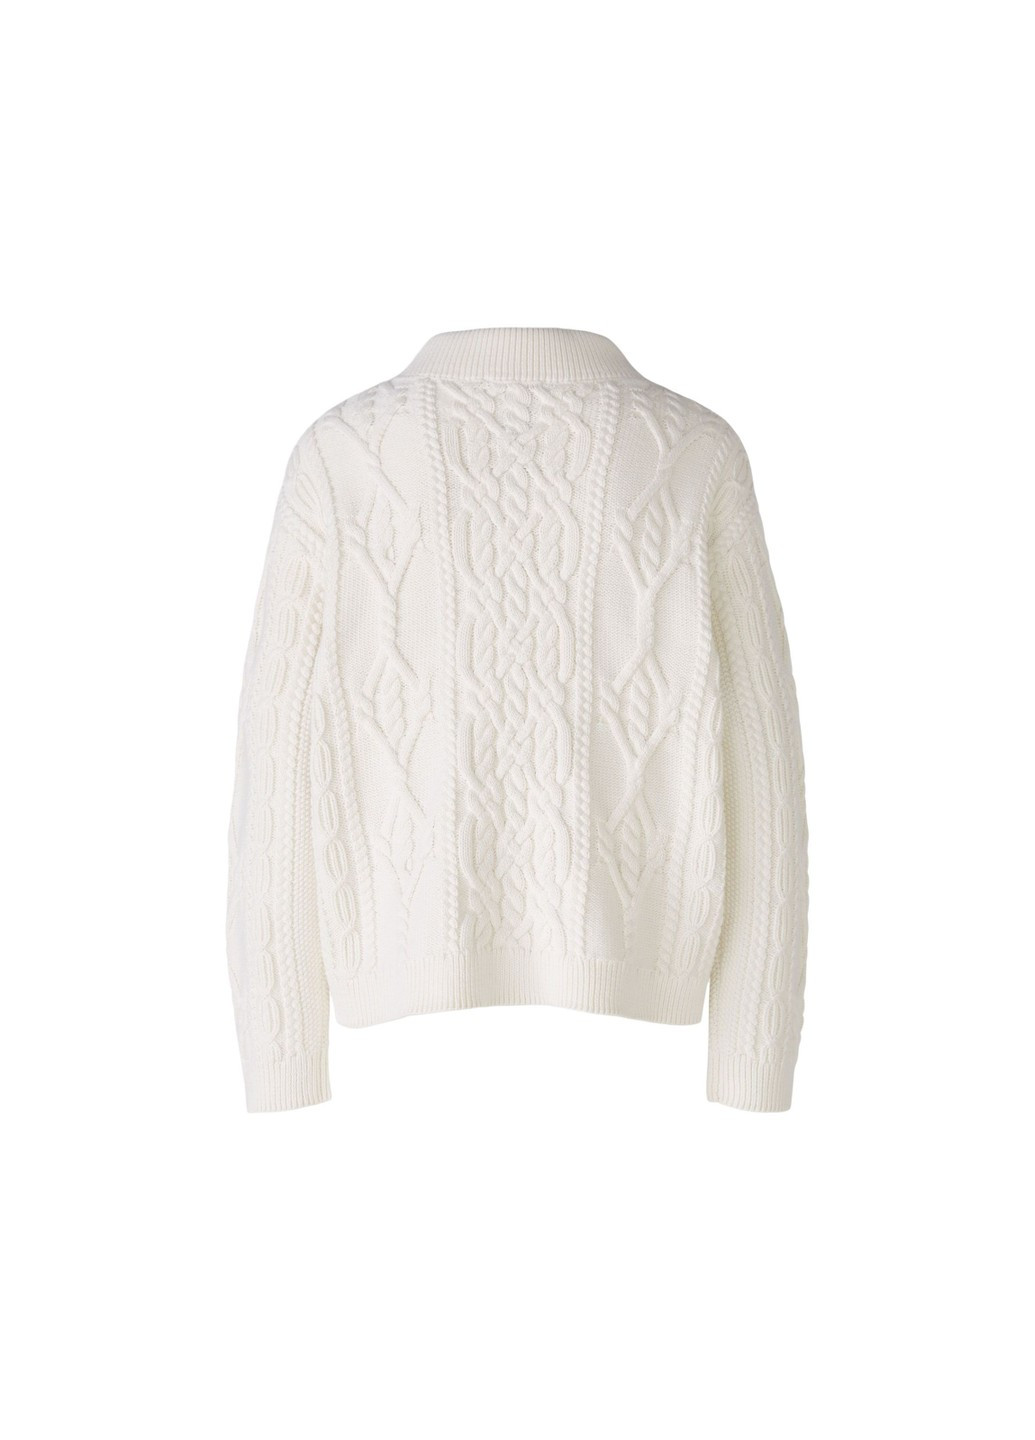 Белый демисезонный женский свитер 86040 1018 белый 46 джемпер Oui